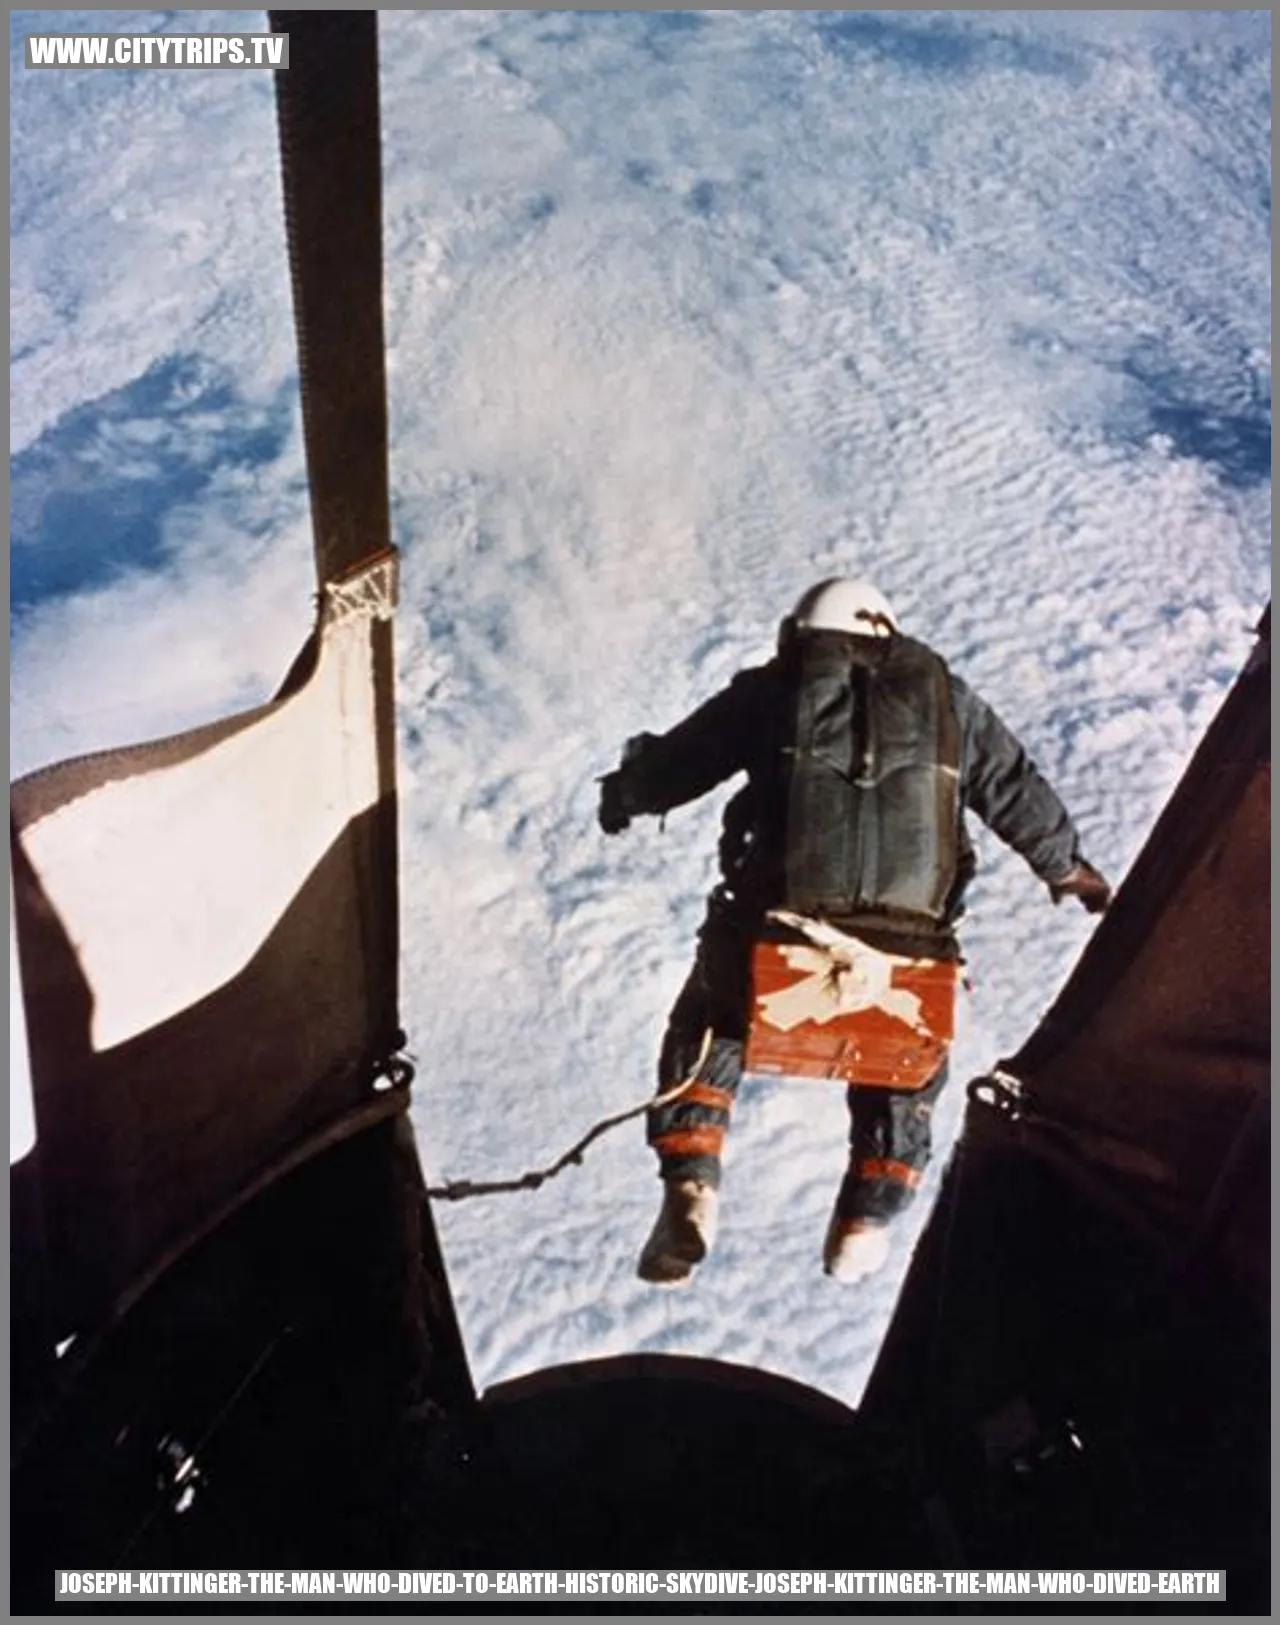 Image of Joseph Kittinger during his historic skydive